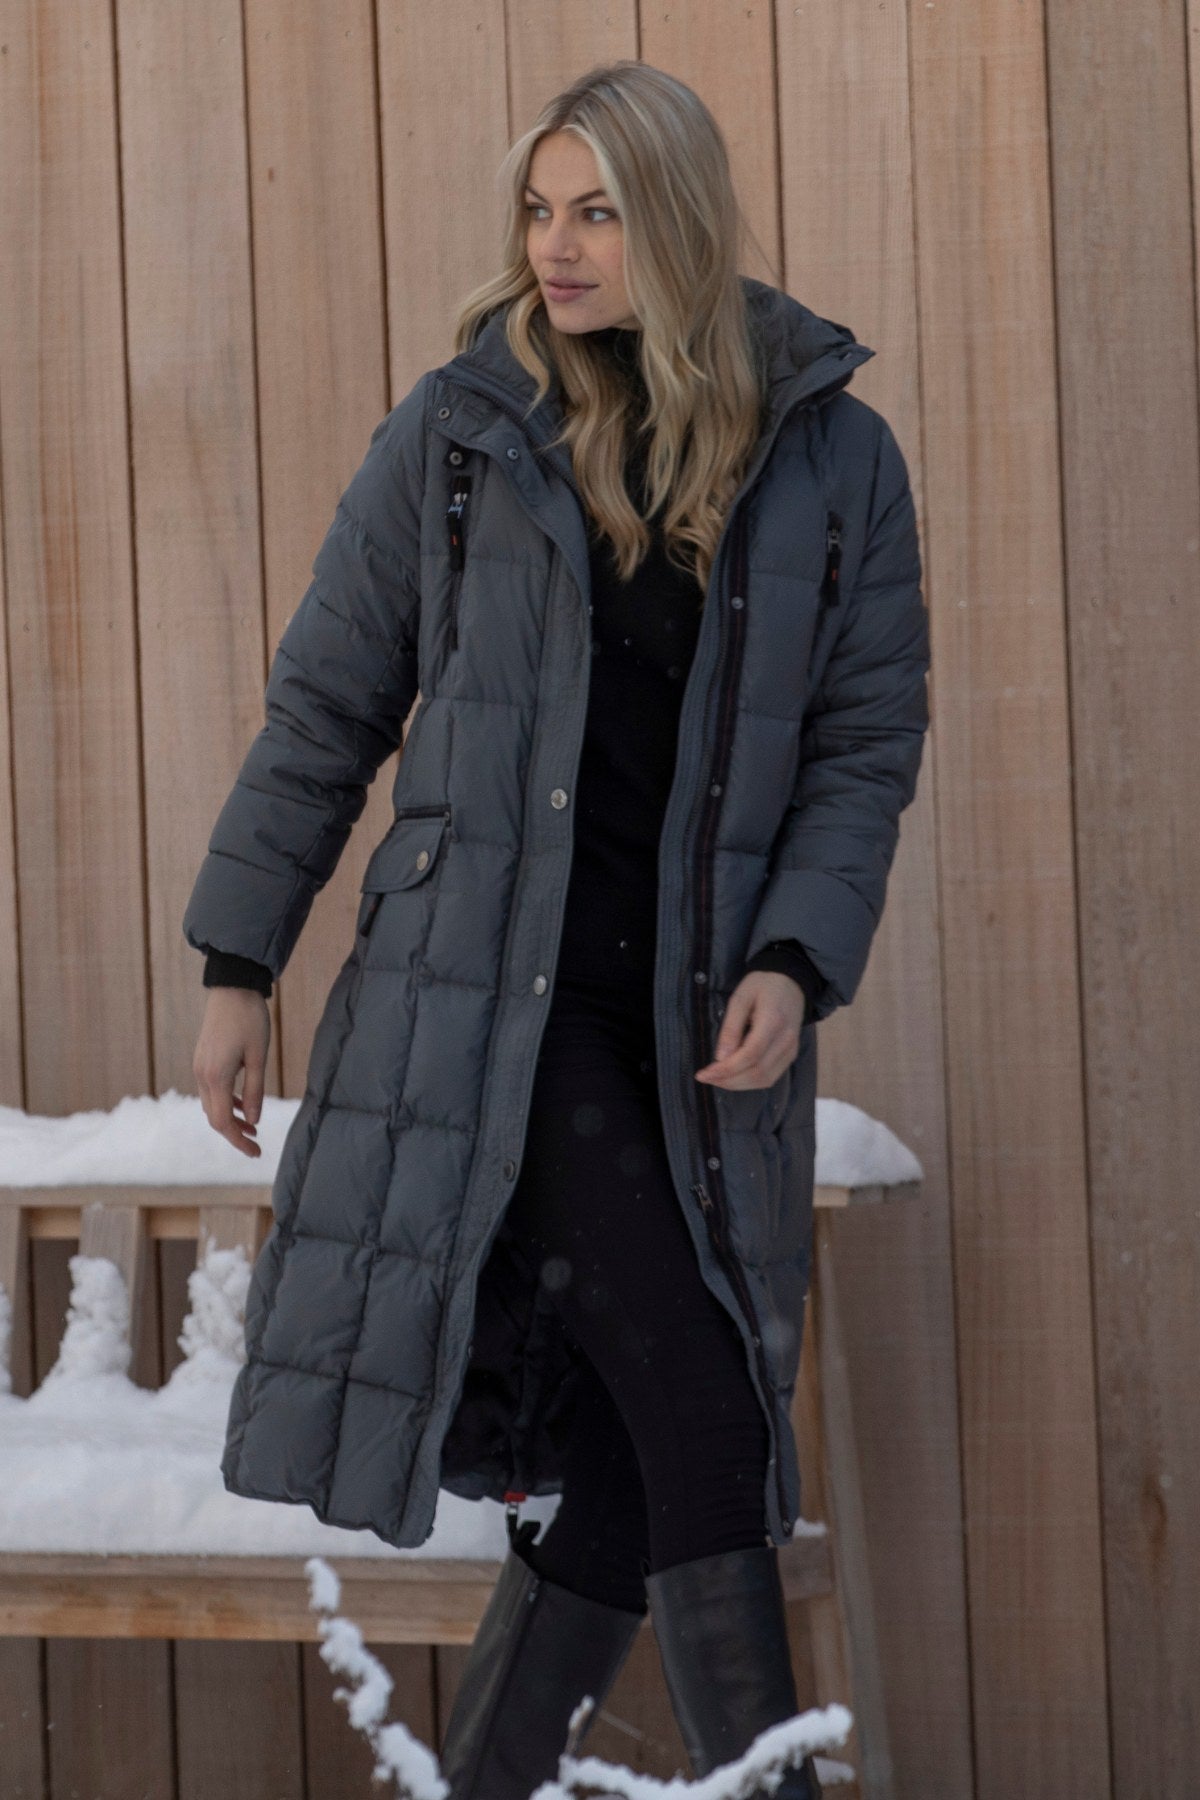 Roaman's Women's Plus Size Long Wool-Blend Coat Winter Classic 